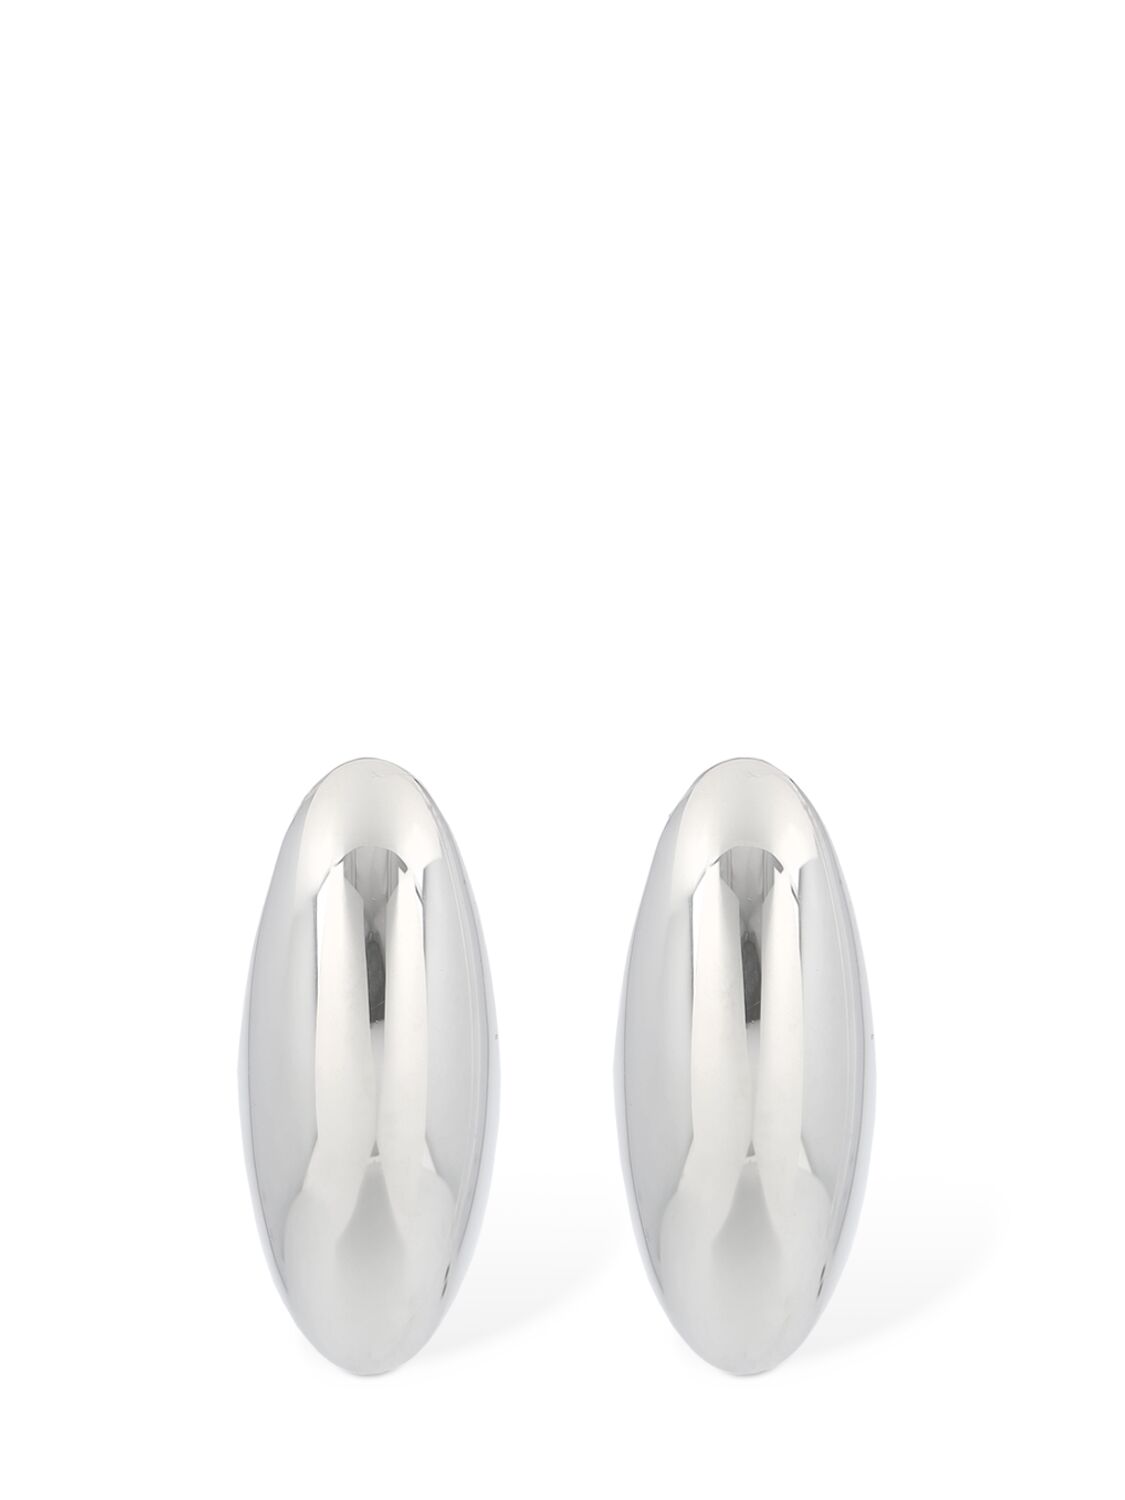 Image of Pebble Stud Earrings